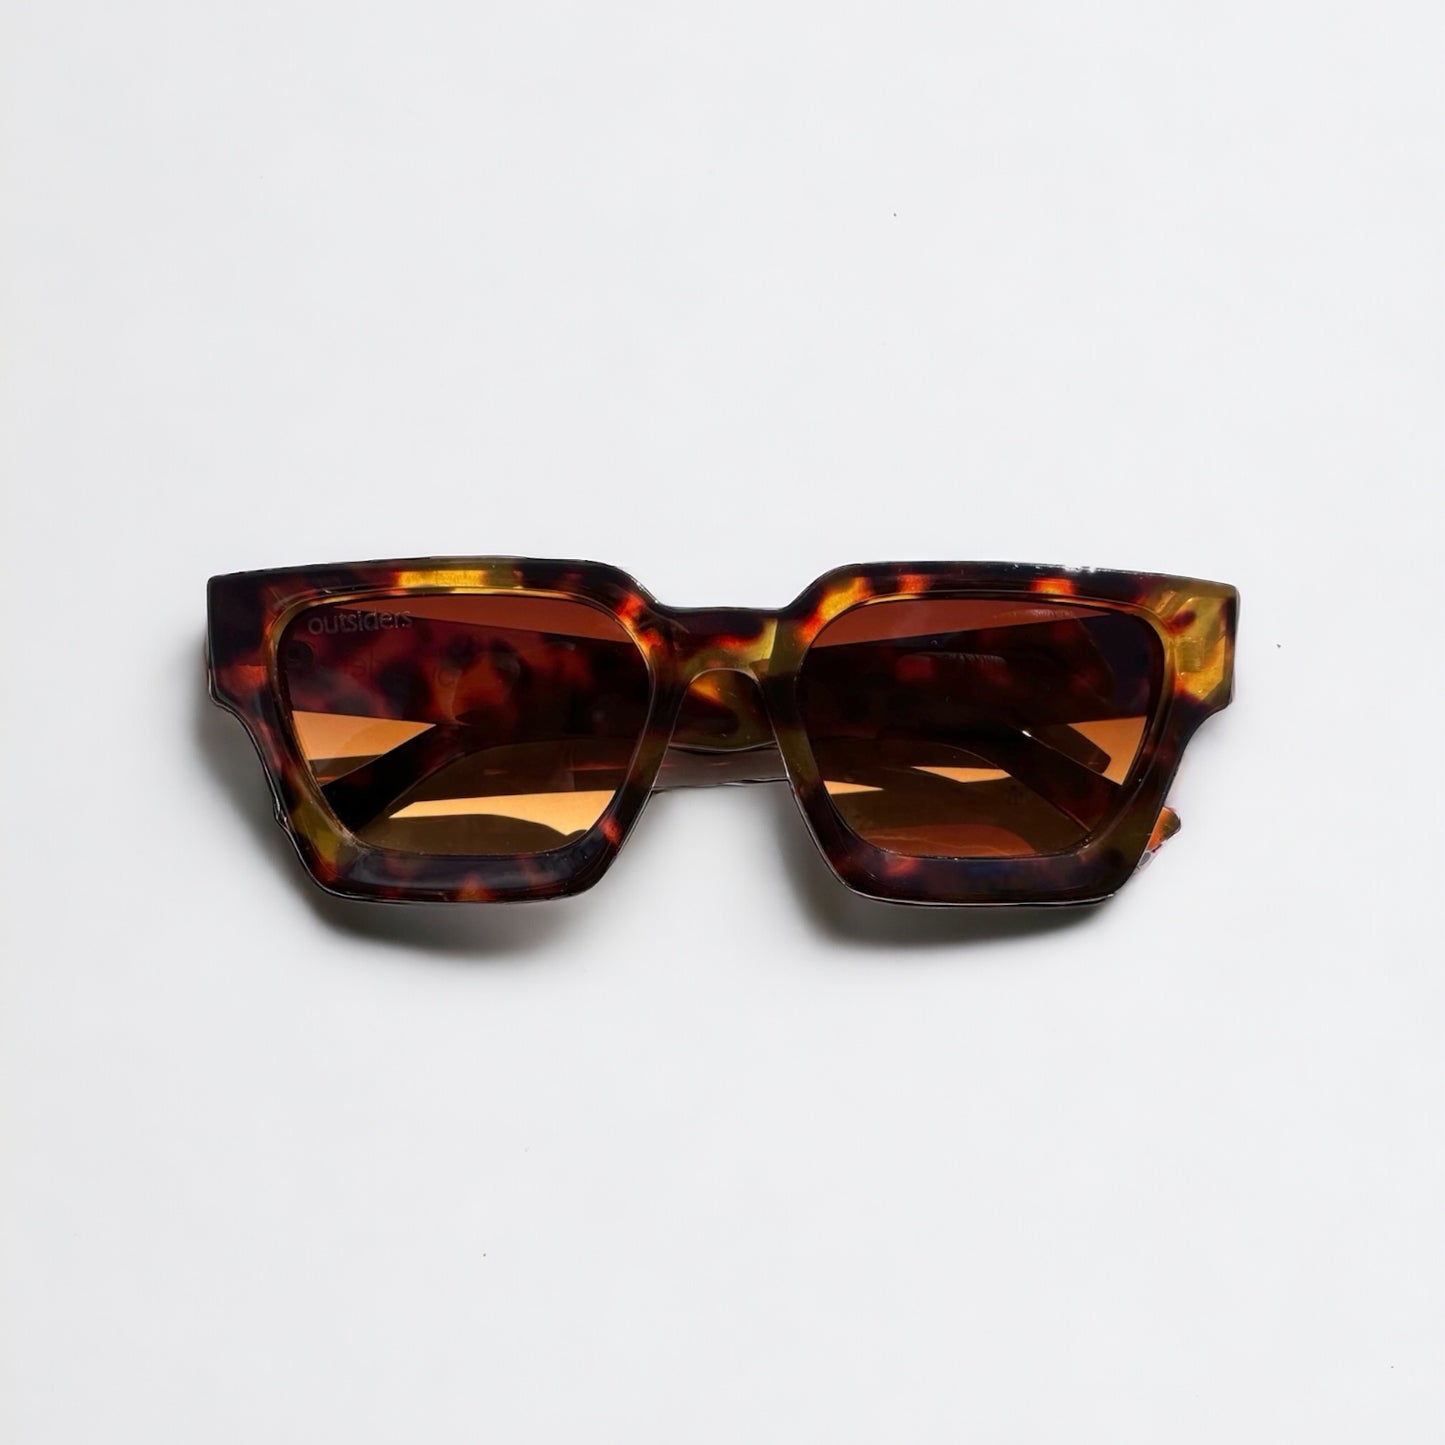 Outsiders Waved Sunglasses - Toritoise Shell